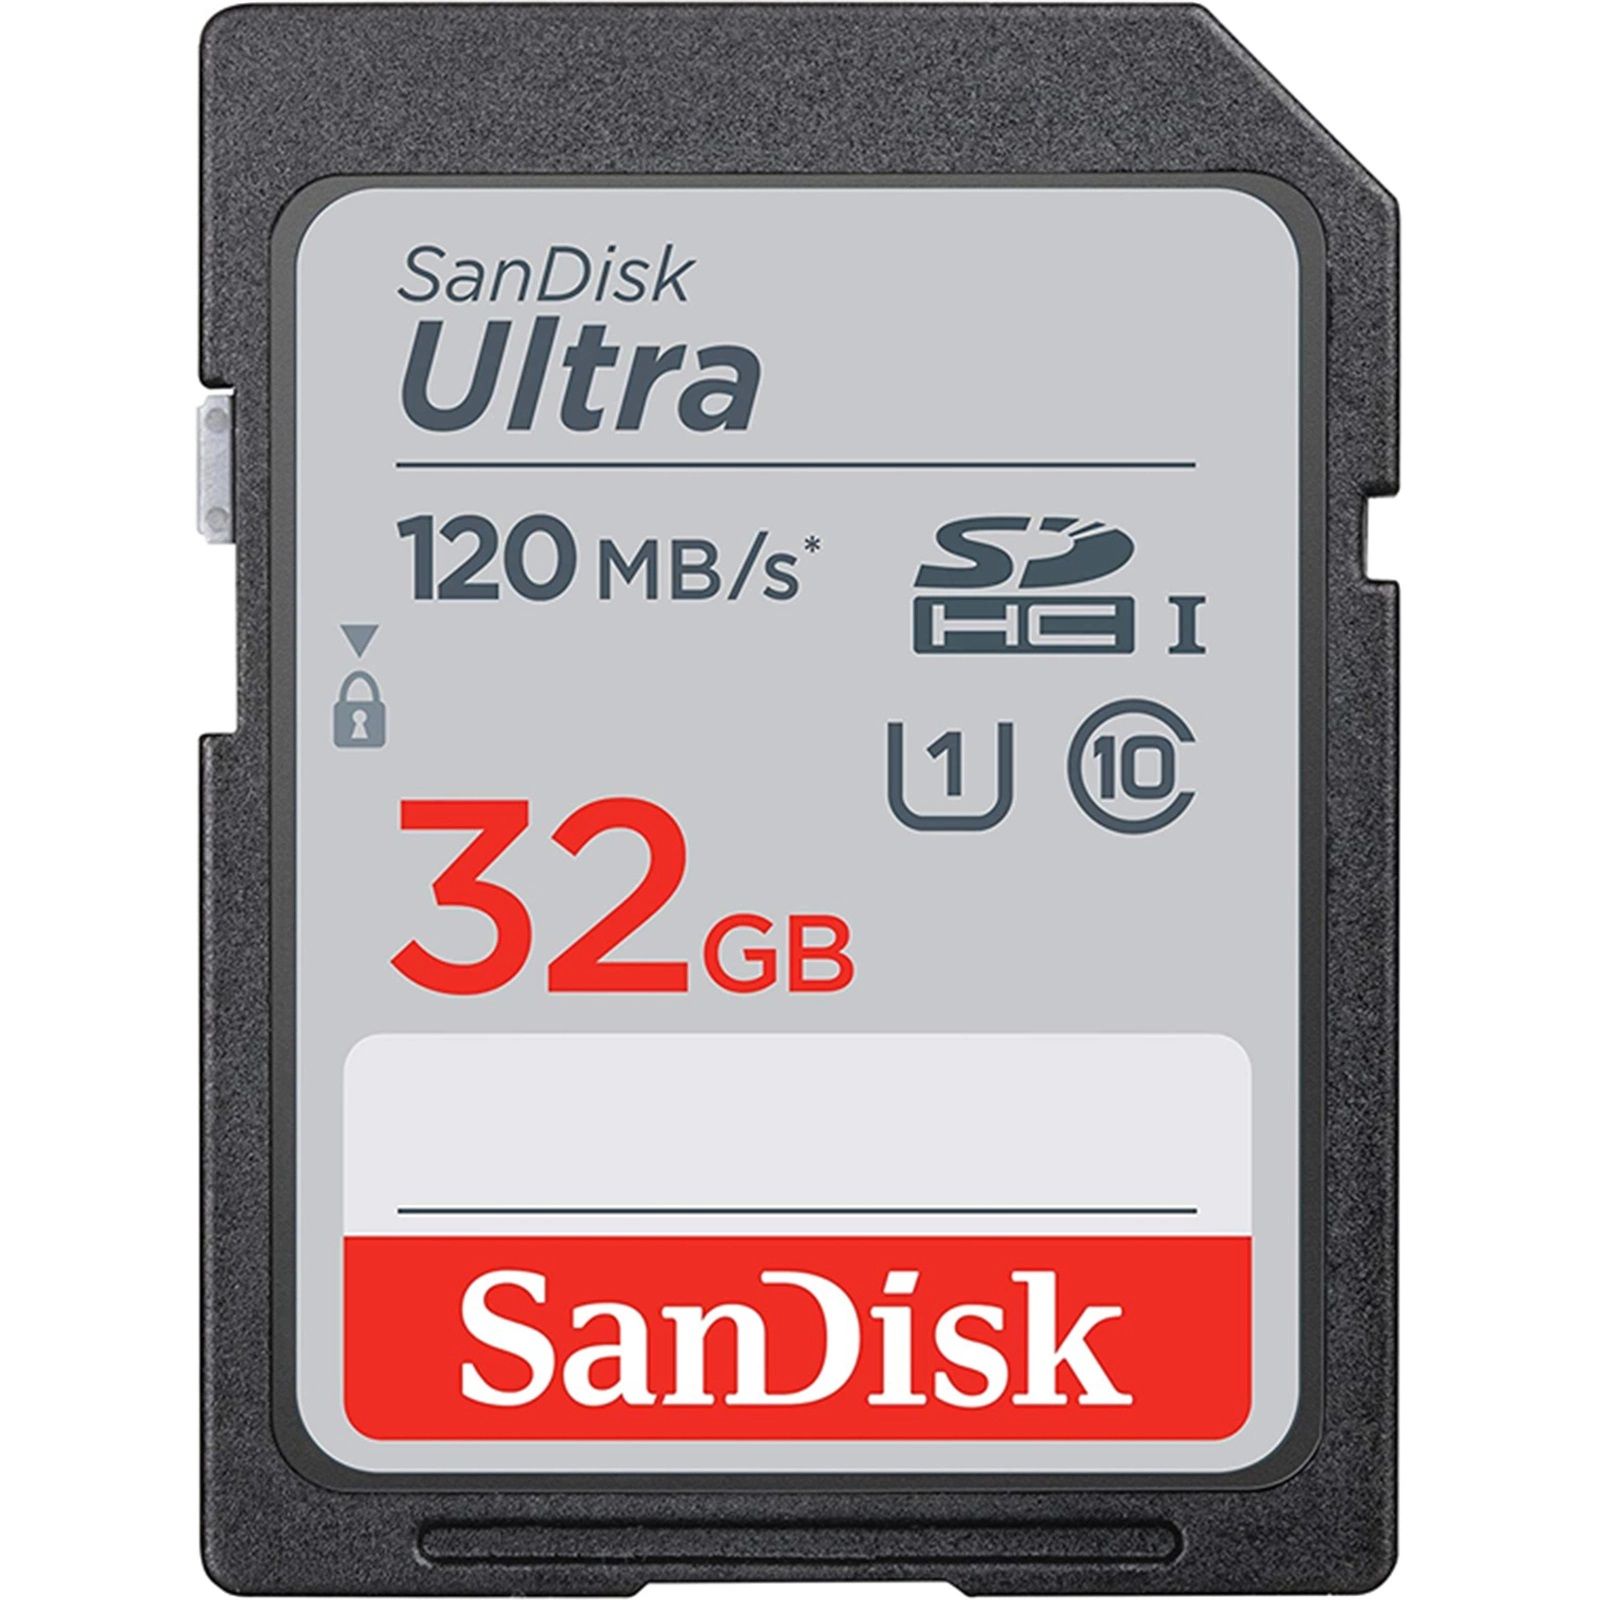 SanDisk Ultra Series SDHC 32GB Memory Card